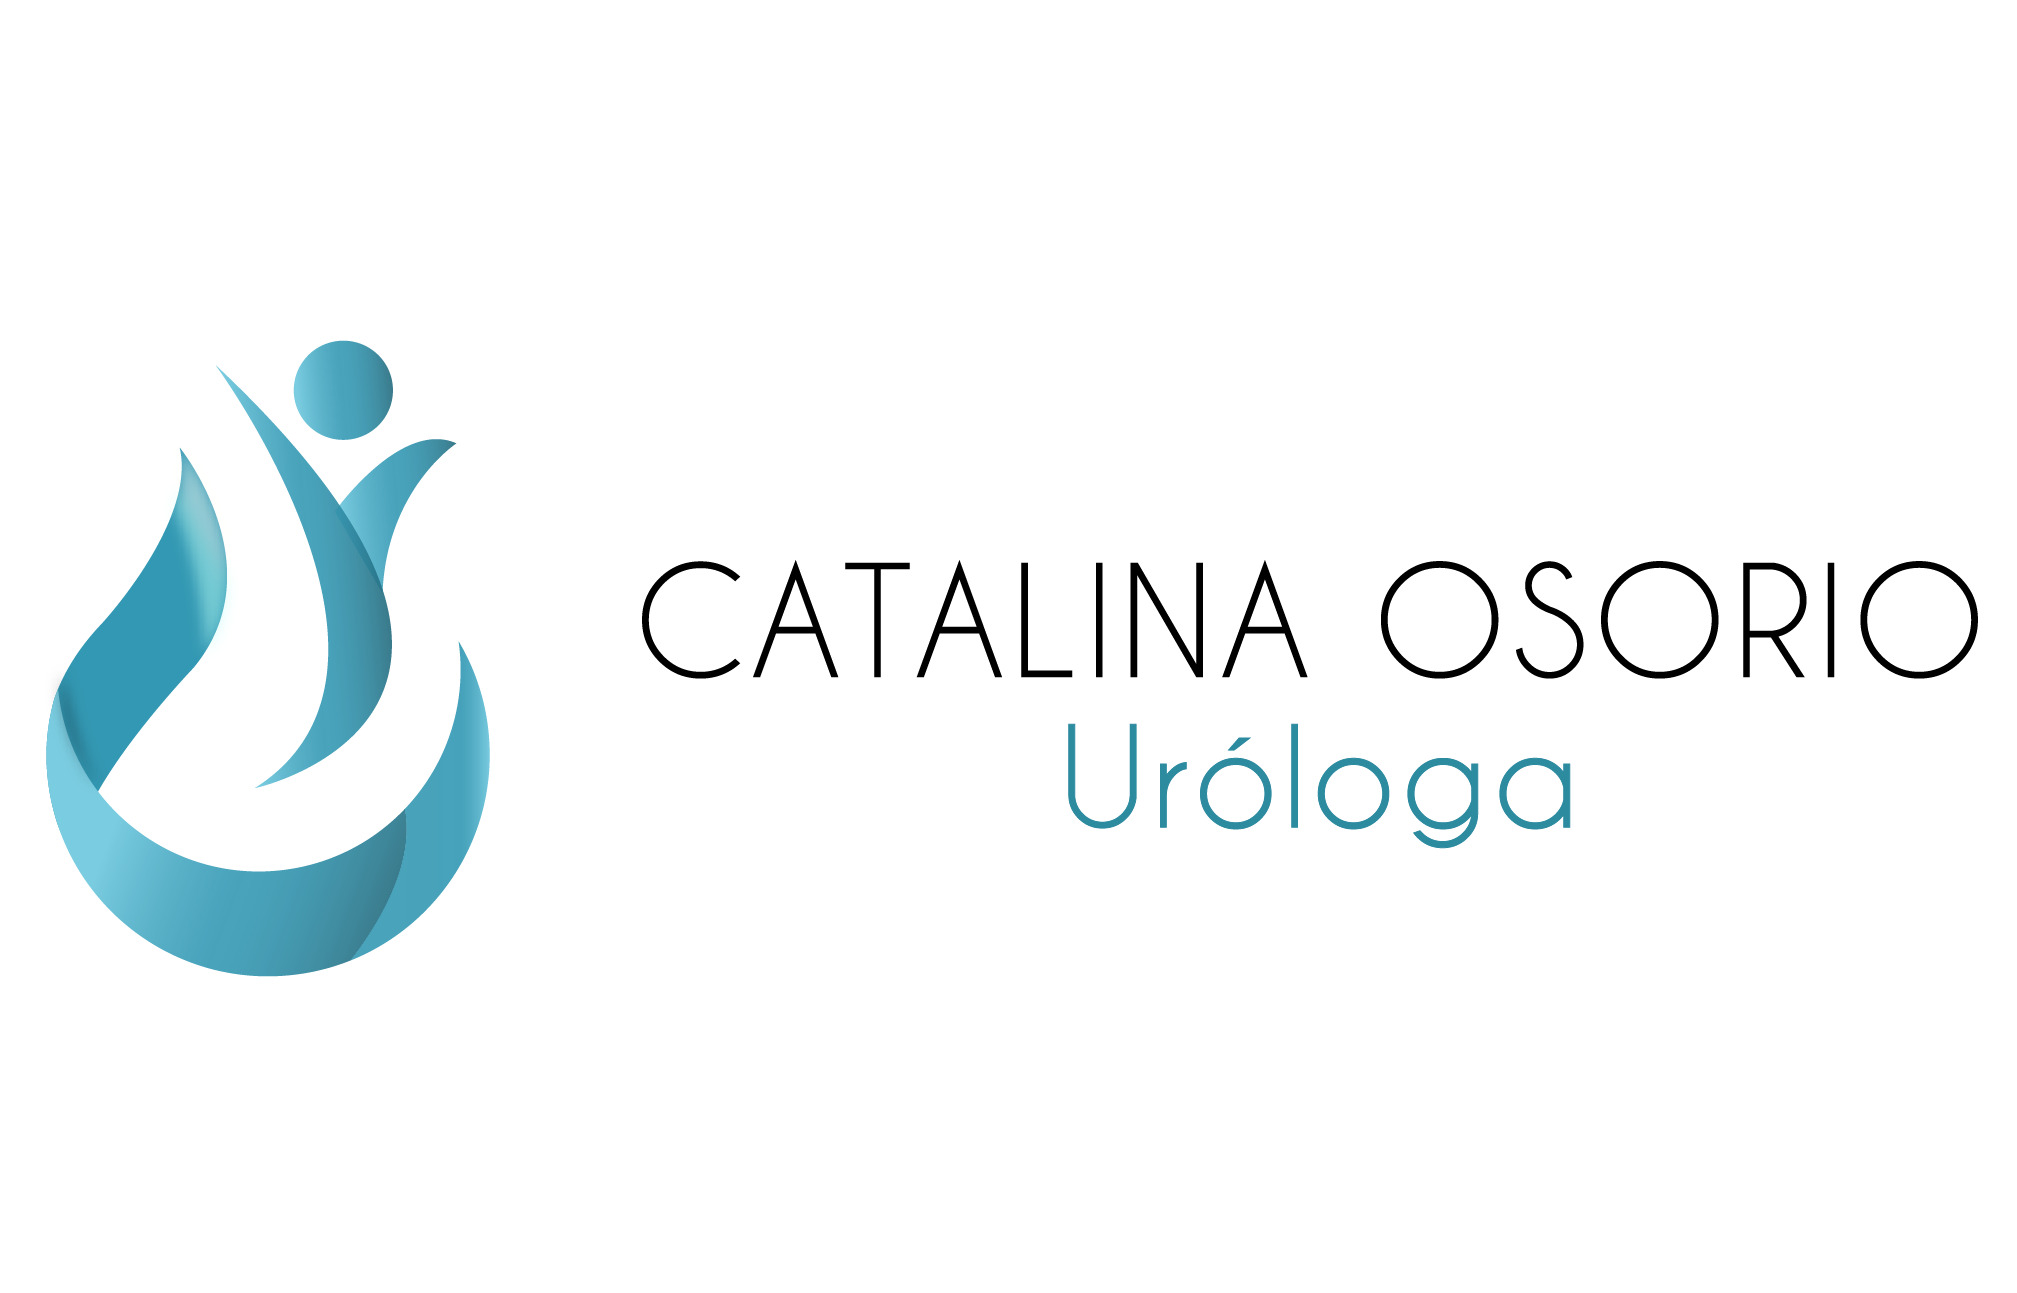 Catalina Osorio (Urologist)